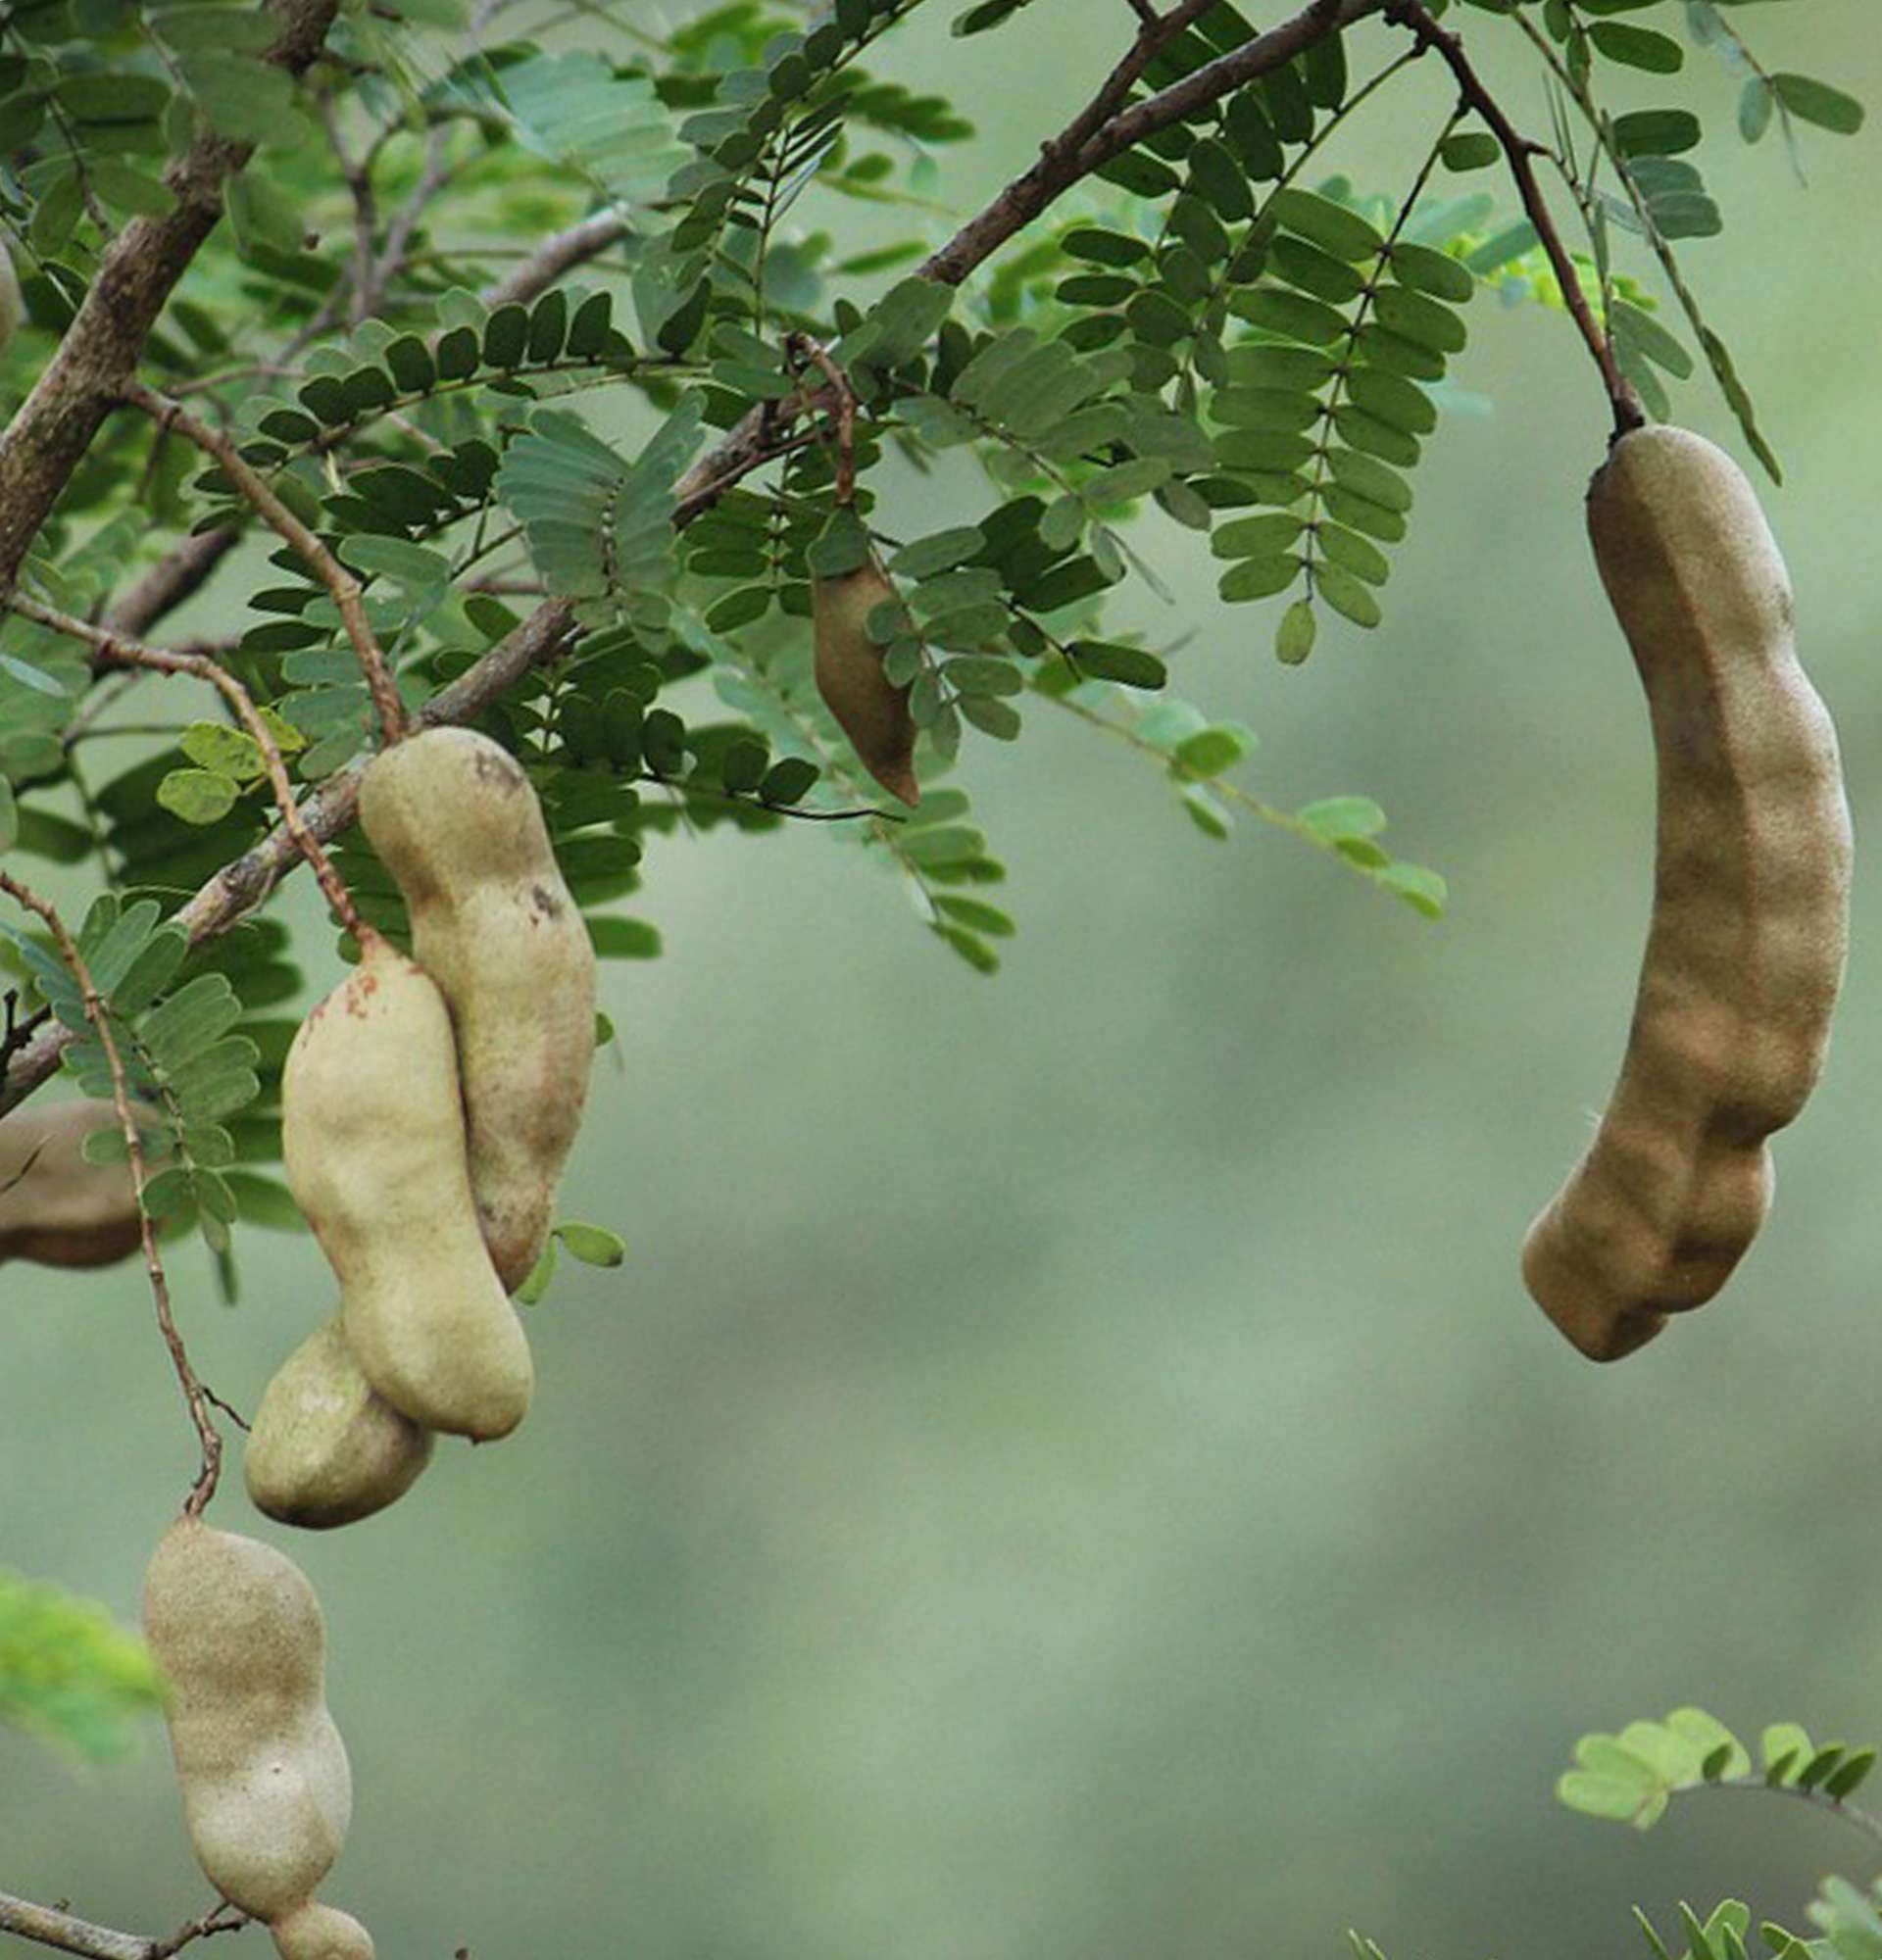  тамаринд фрукт фото - индийский финик плоды